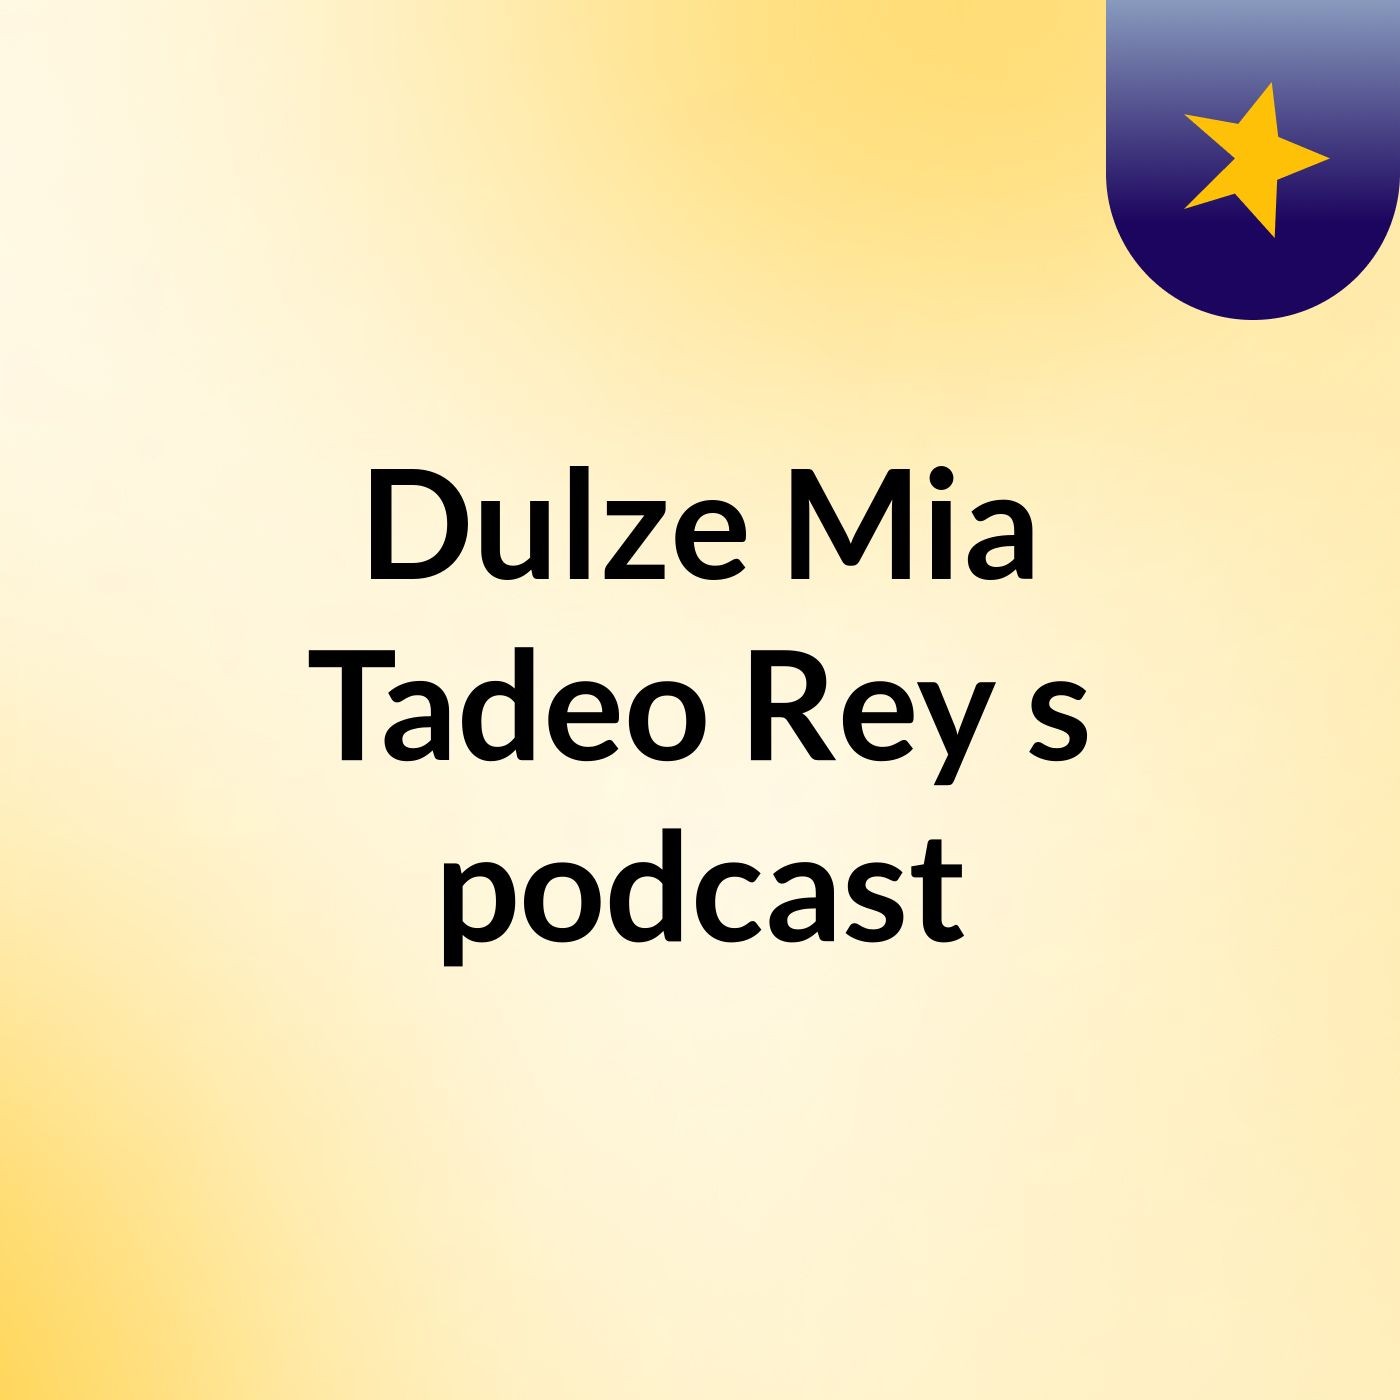 Episodio 17 - Dulze Mia Tadeo Rey's podcast